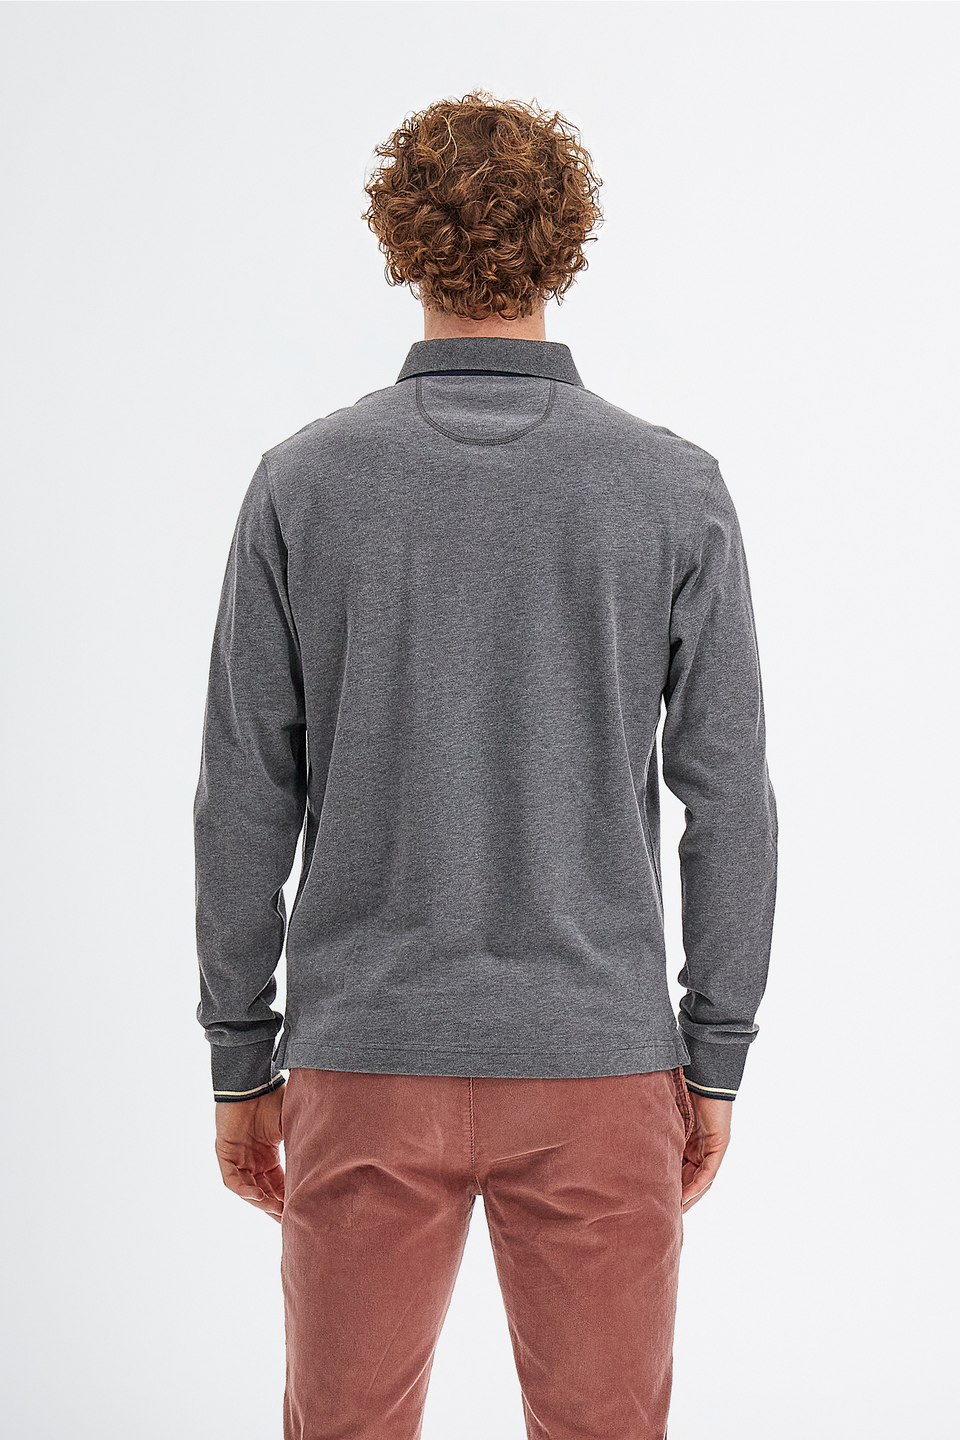 Herren-Poloshirt aus Baumwolljersey mit langen Ärmeln | La Martina - Official Online Shop